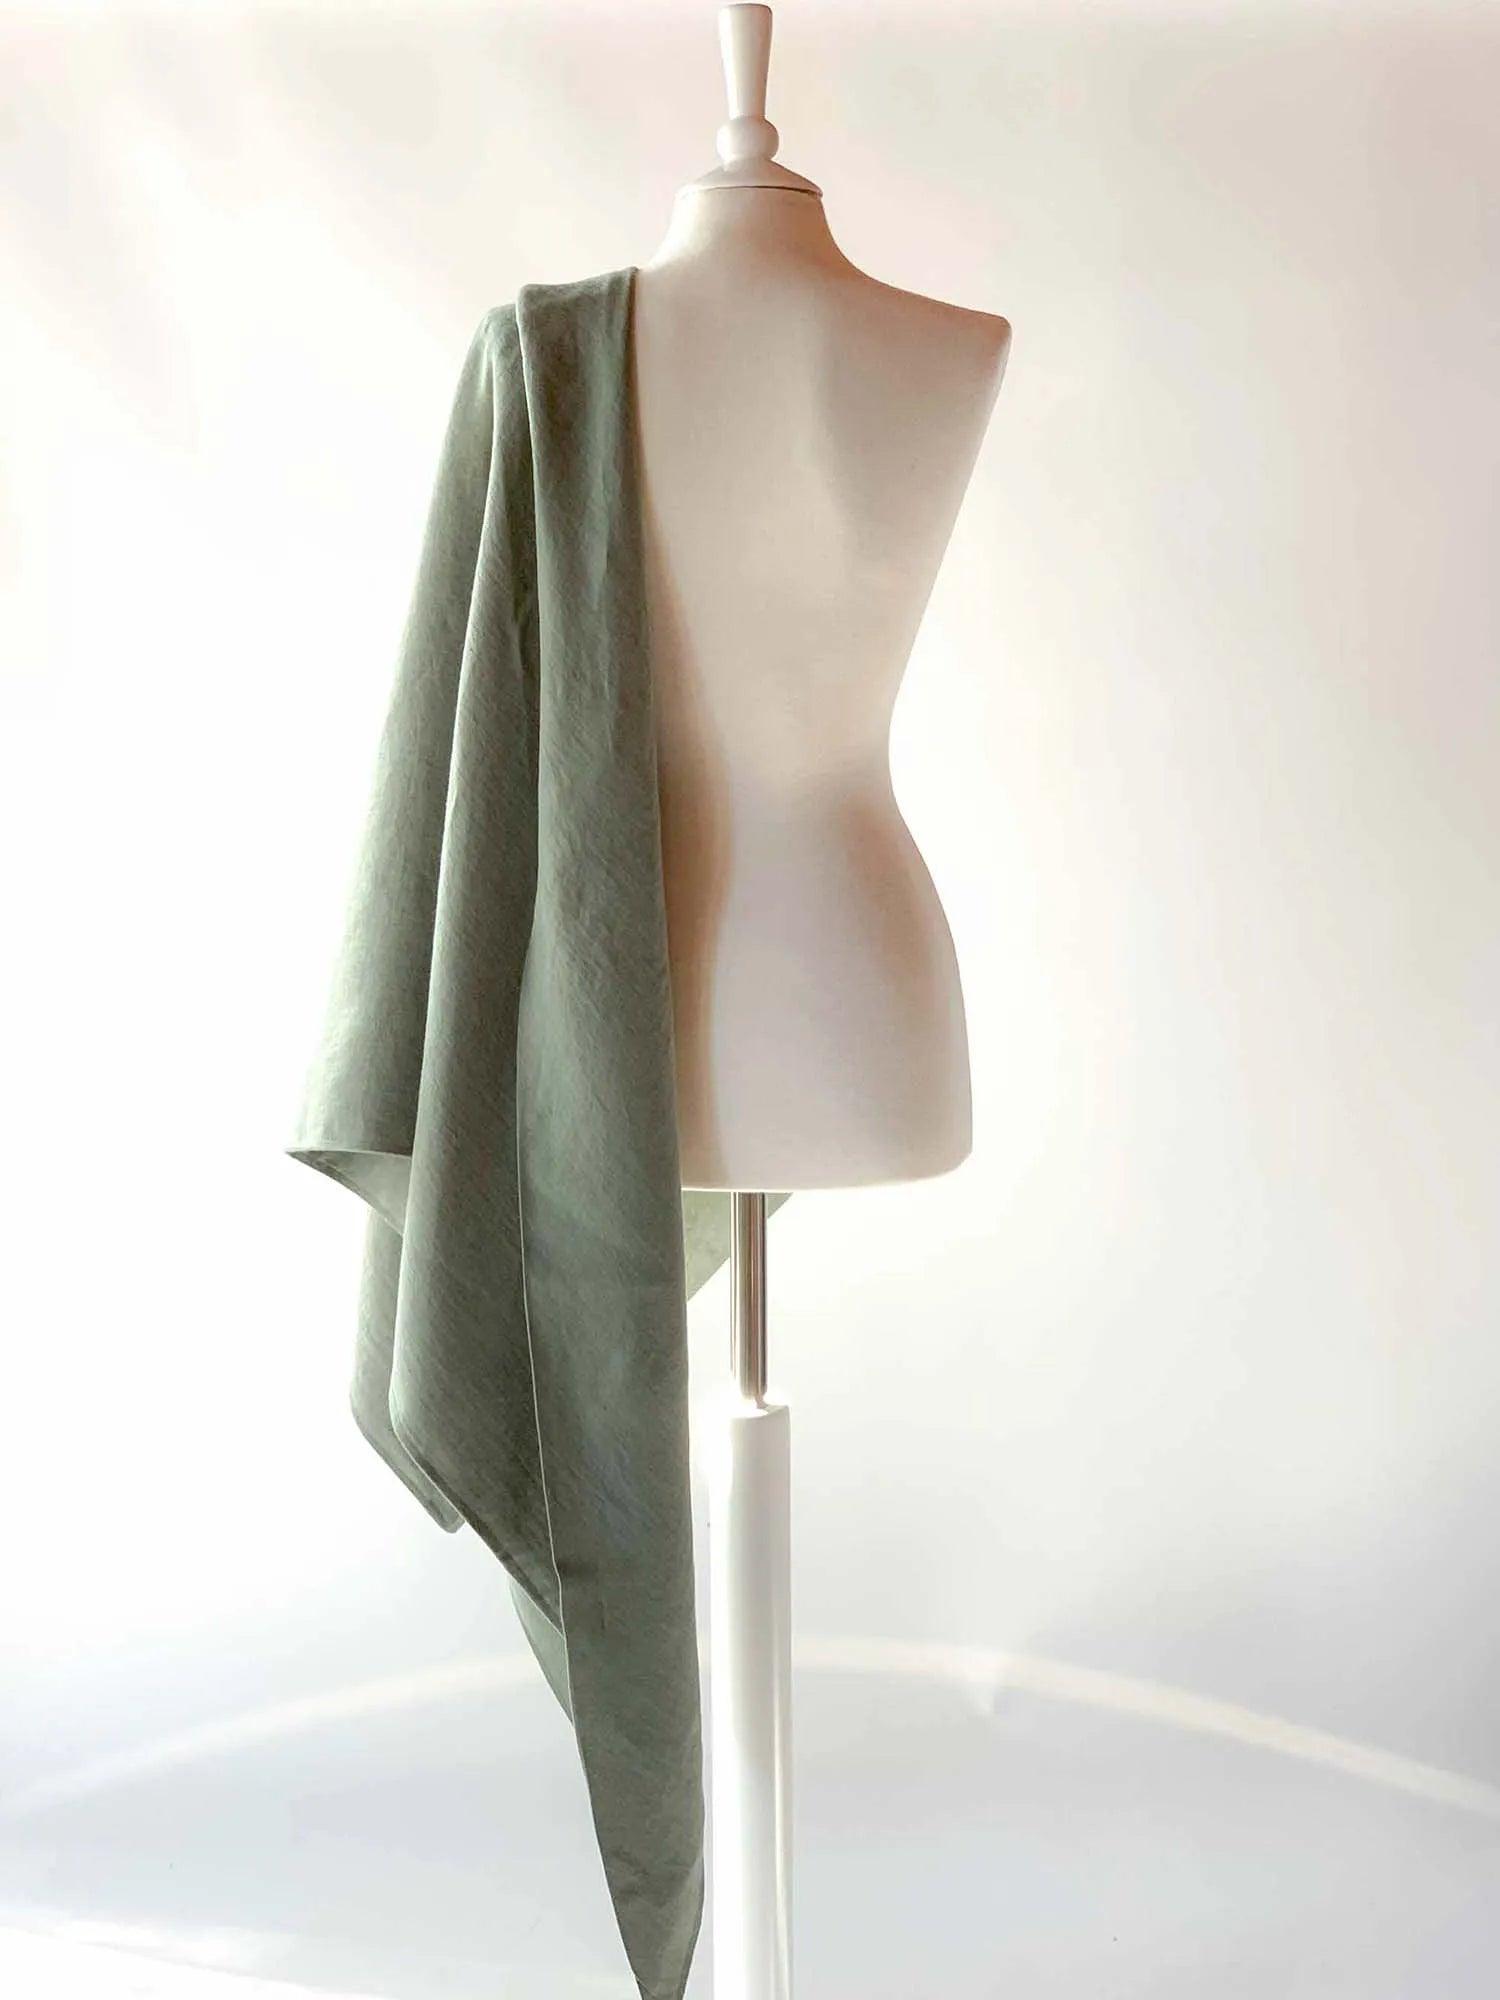 Large Linen Shawl in Sage Green Linen - Atelier Serraspina